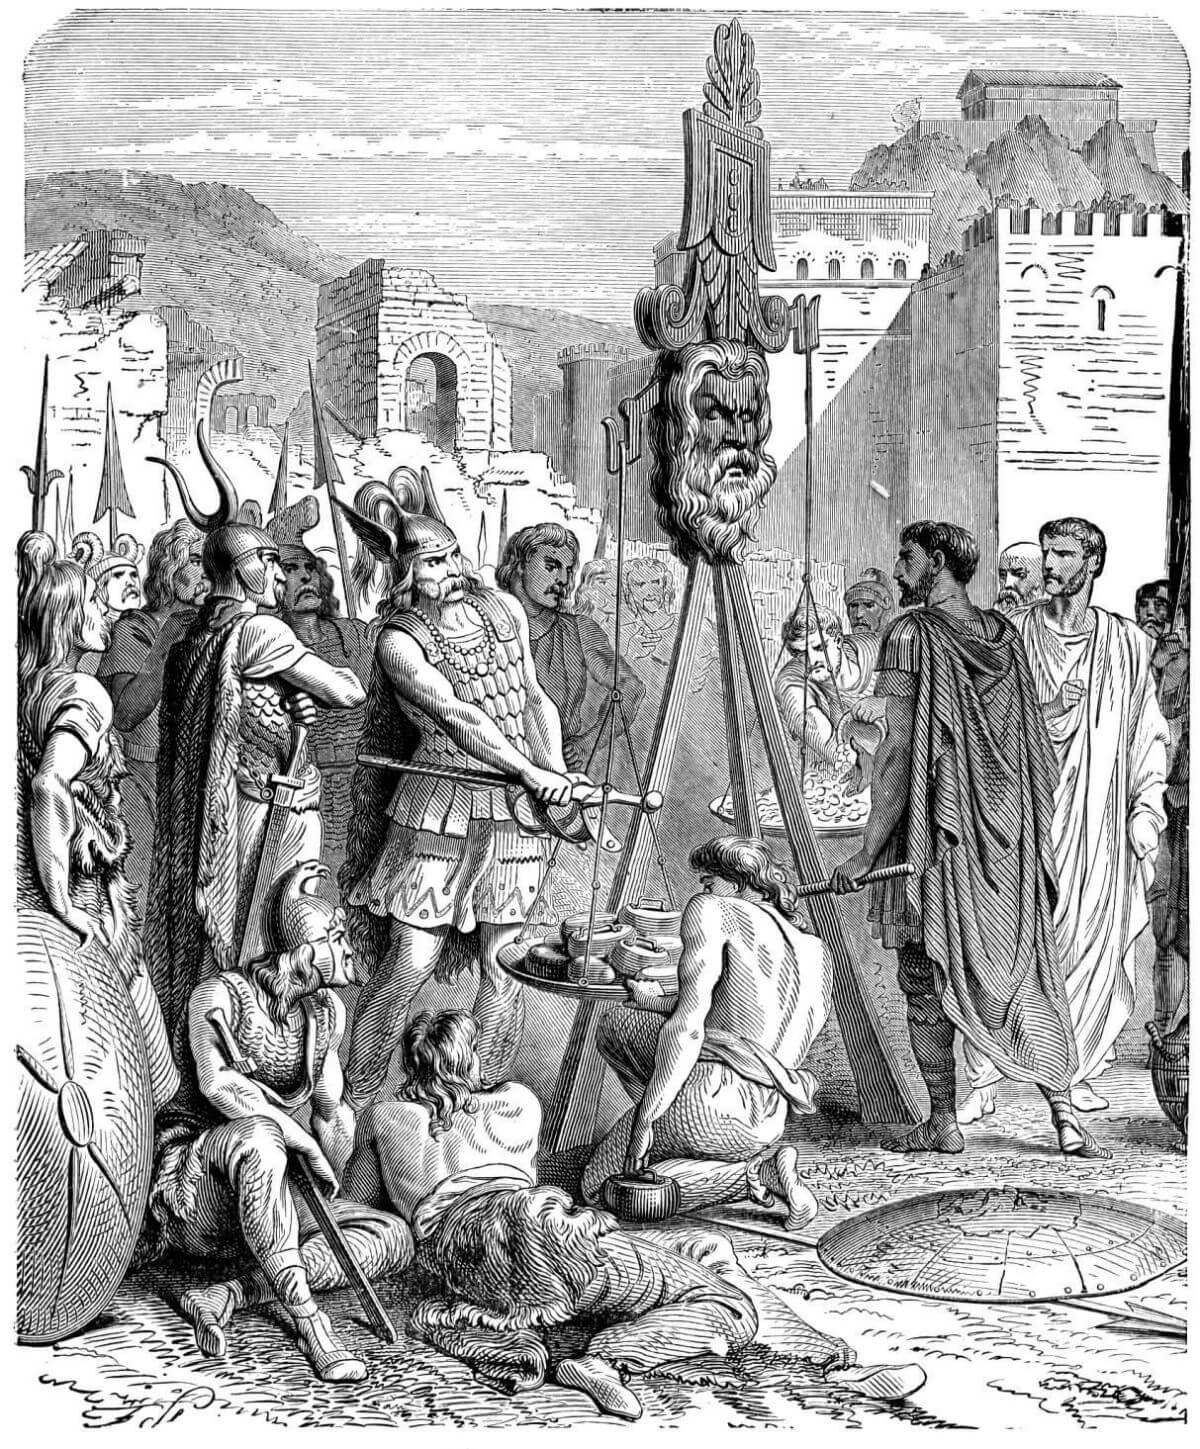 Illustration of Brennus and Camillus, during the siege of Rome, from 'Histoire de France en cent tableaux' by Paul Lehugeur, Paris, 1886.